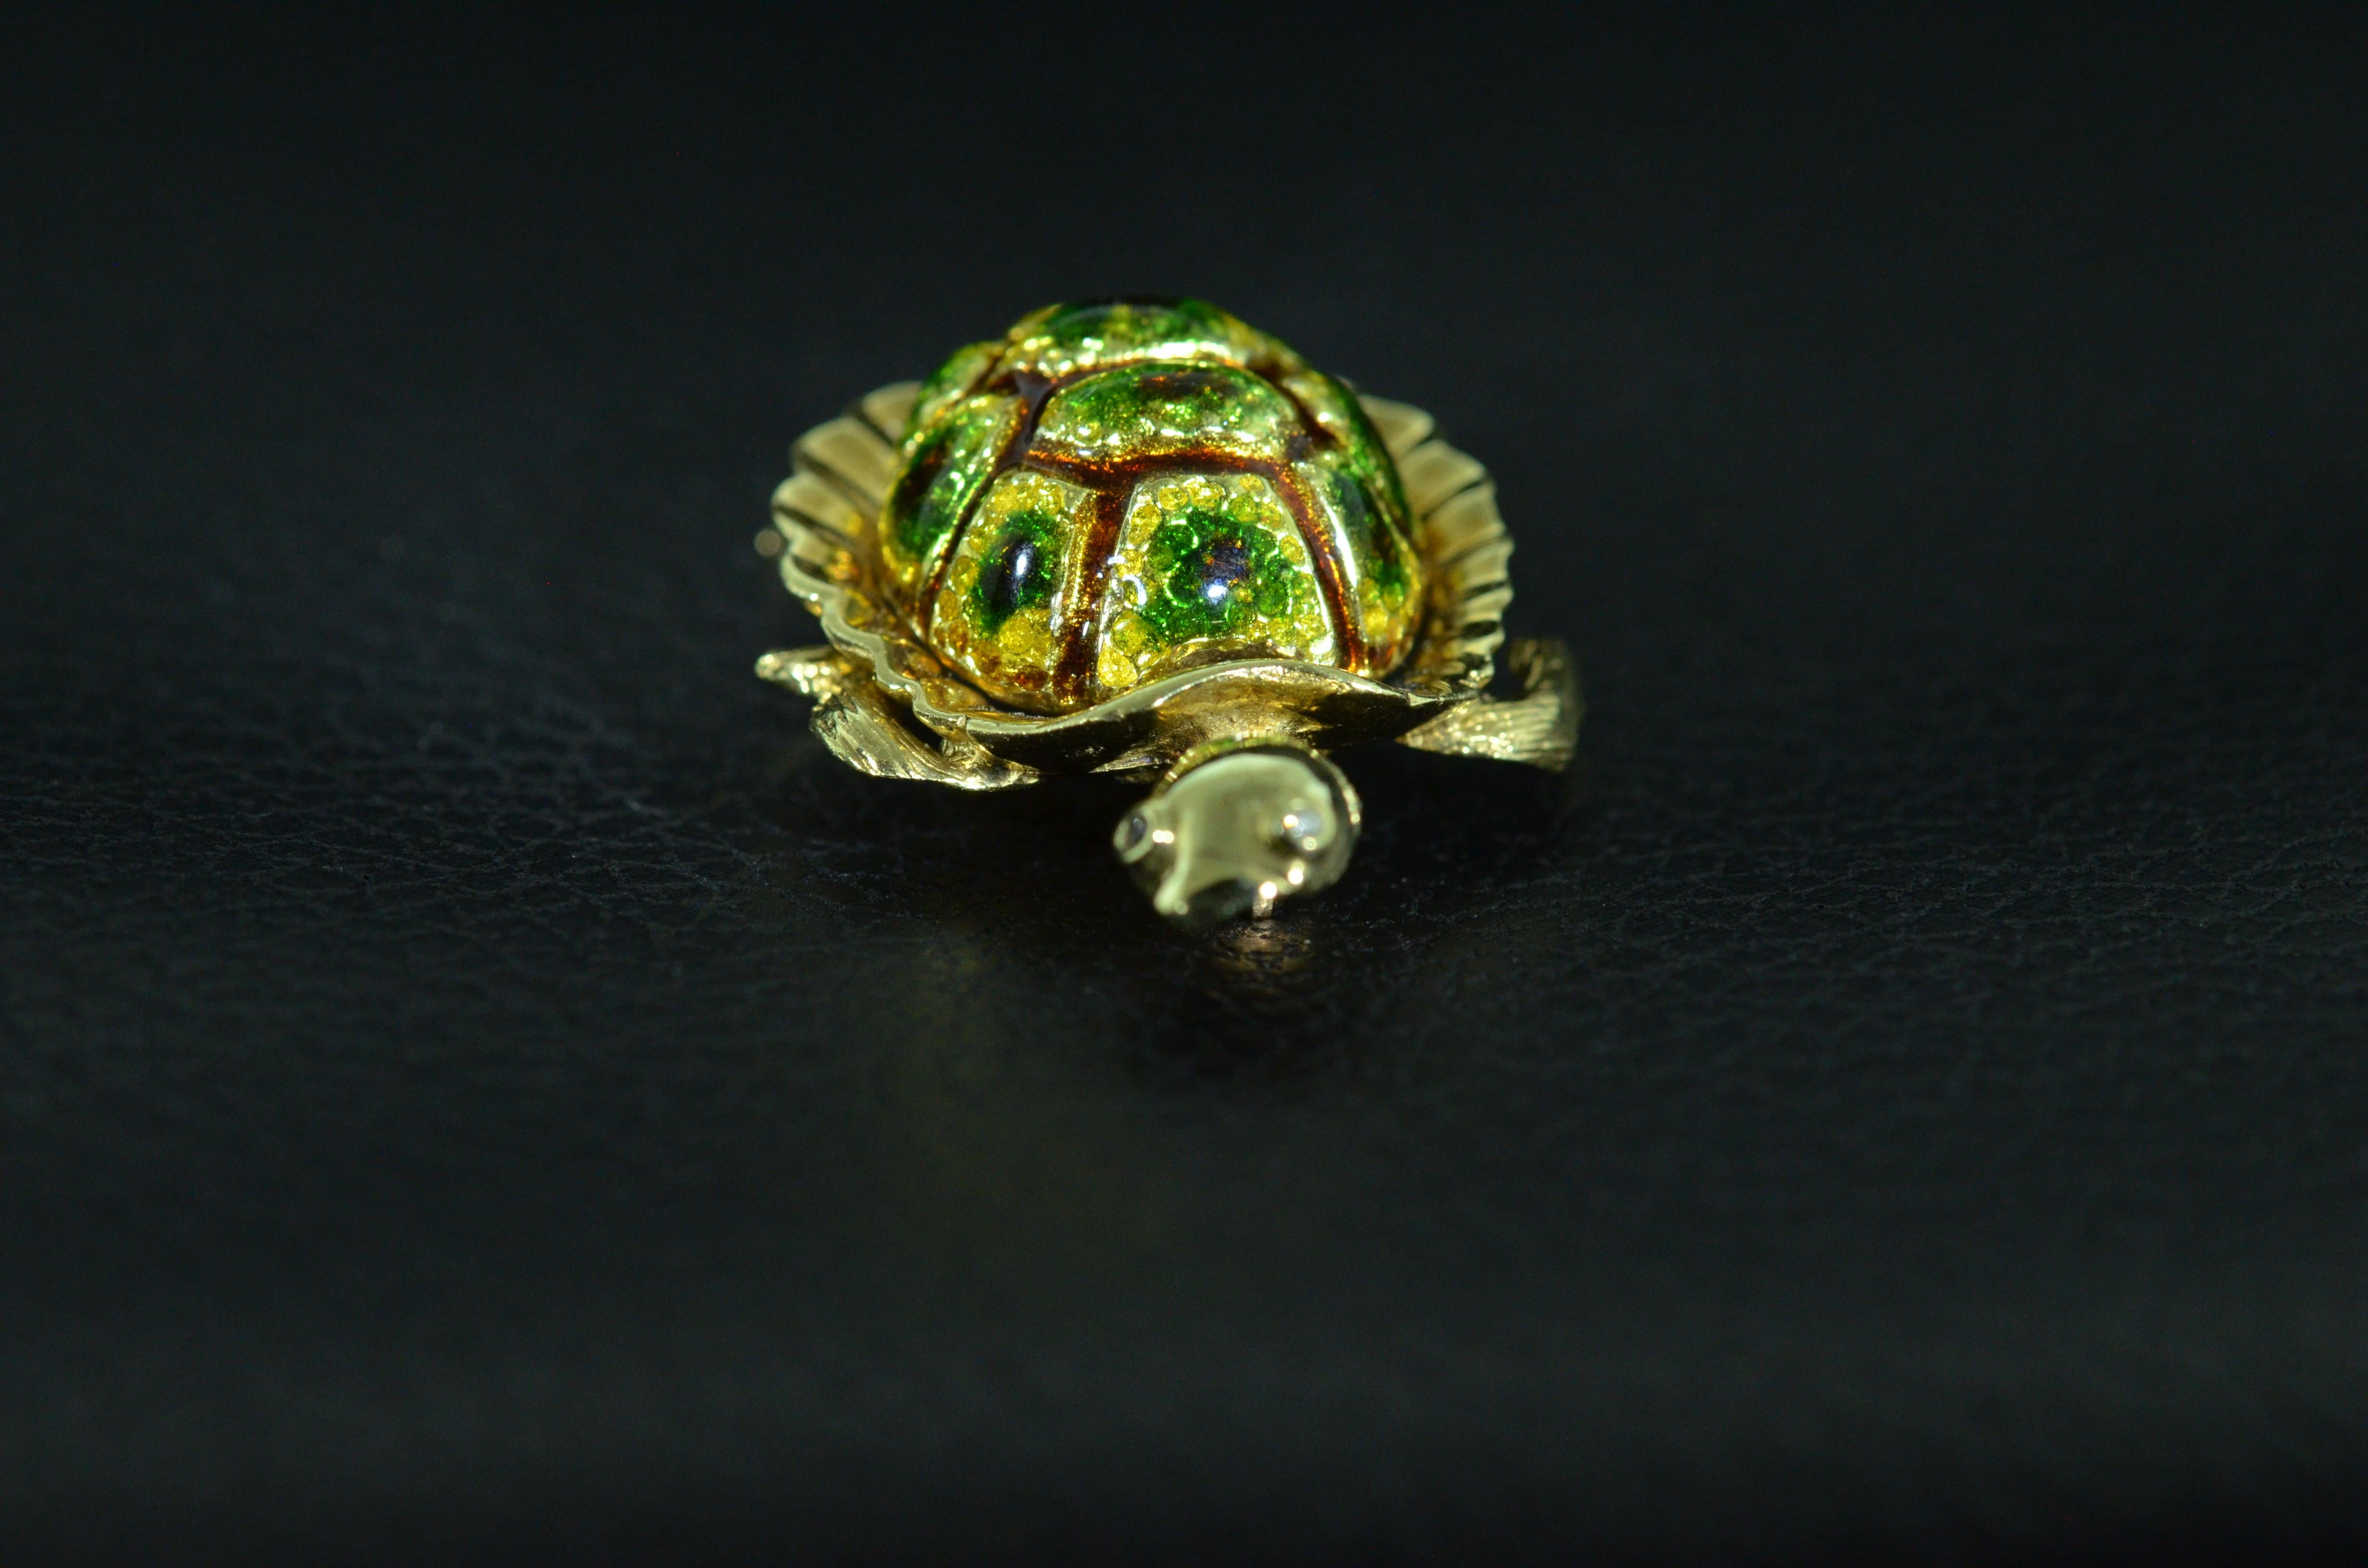 Karbra Turtle Brooch with Enamel and Diamond Eyes For Sale 1